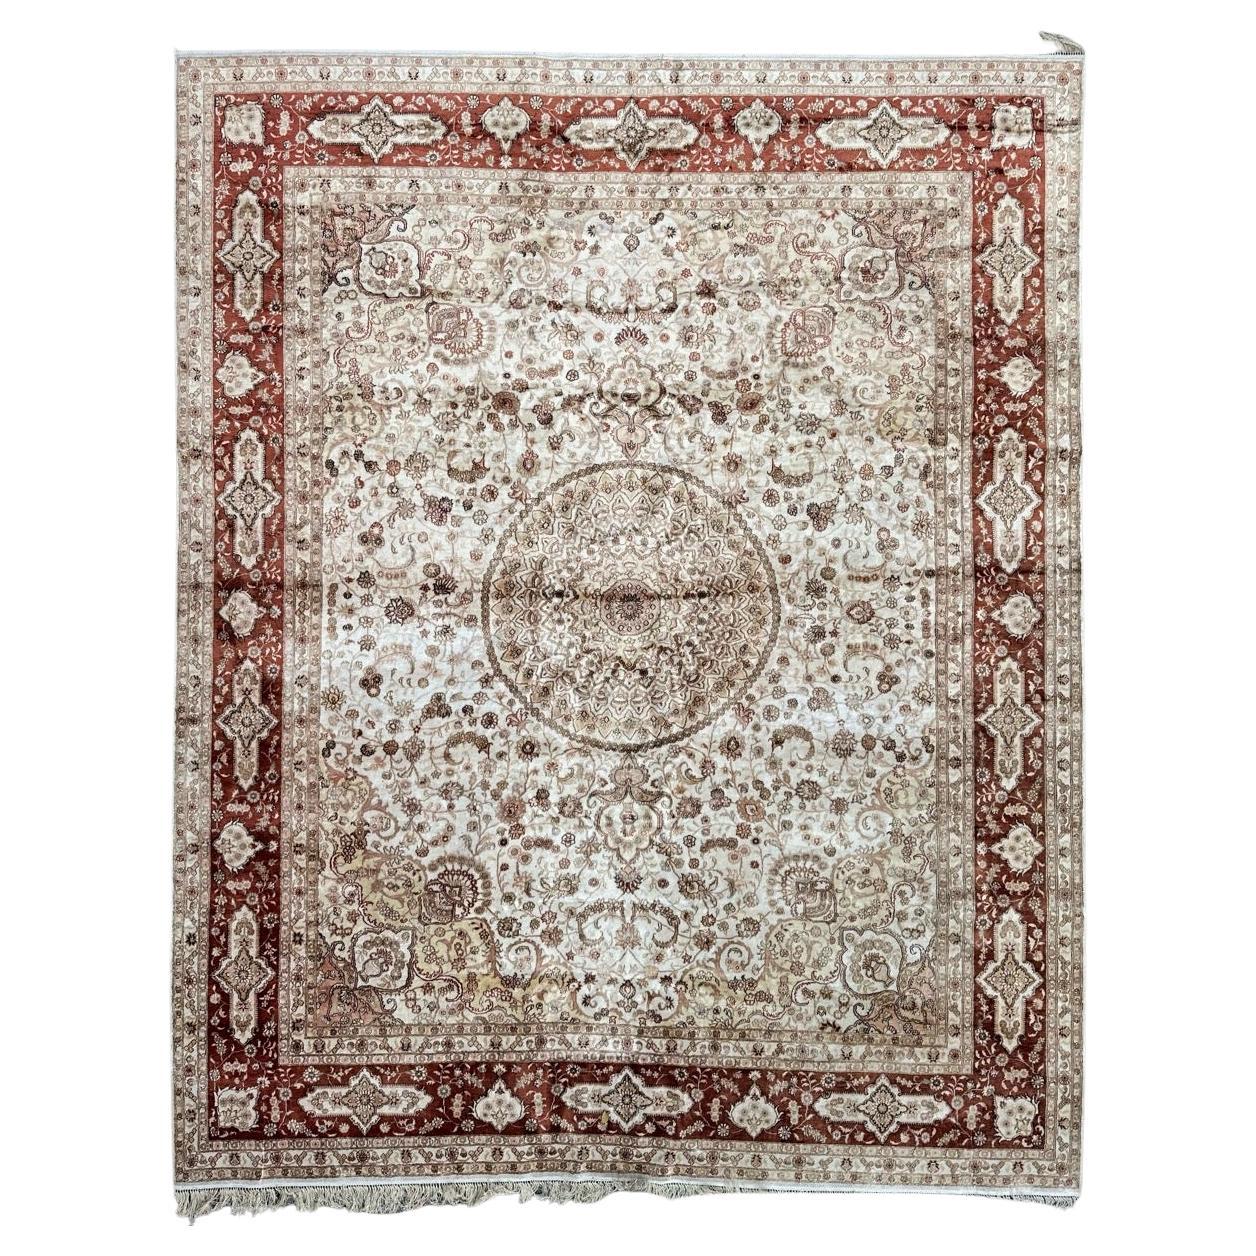 Bobyrug’s Nice vintage fine silk tabriz style Chinese rug 